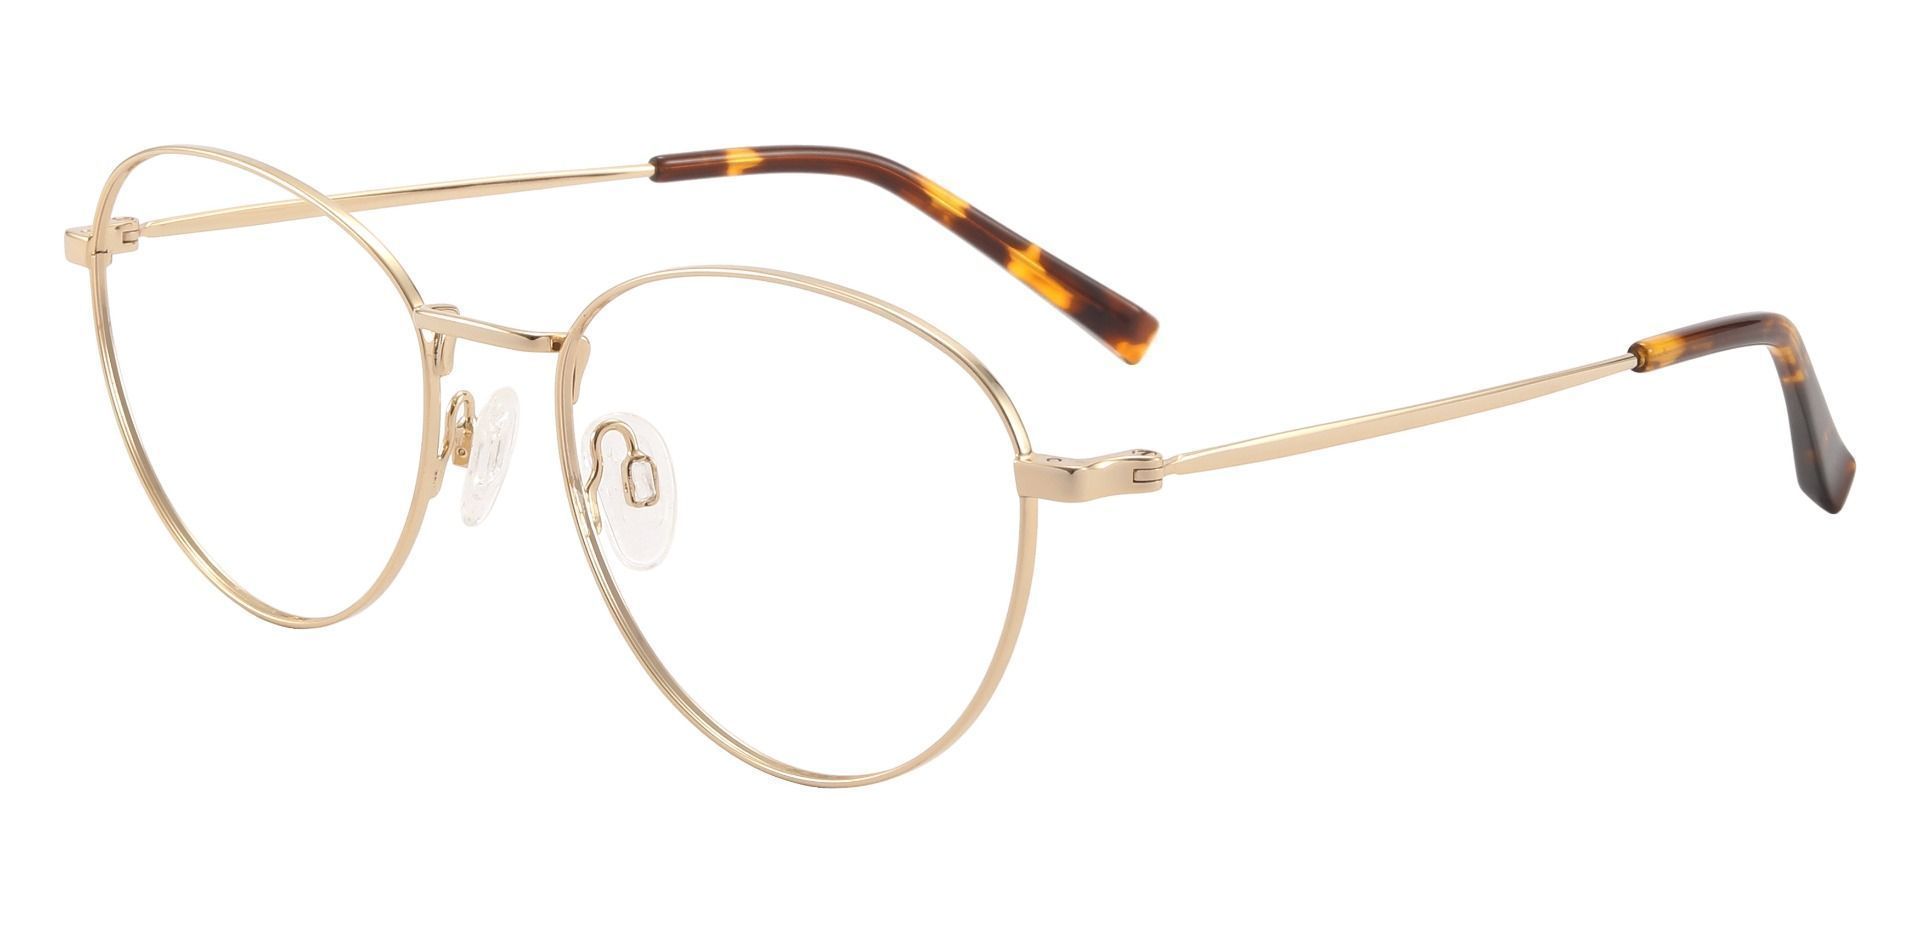 Elmira Oval Prescription Glasses - Gold